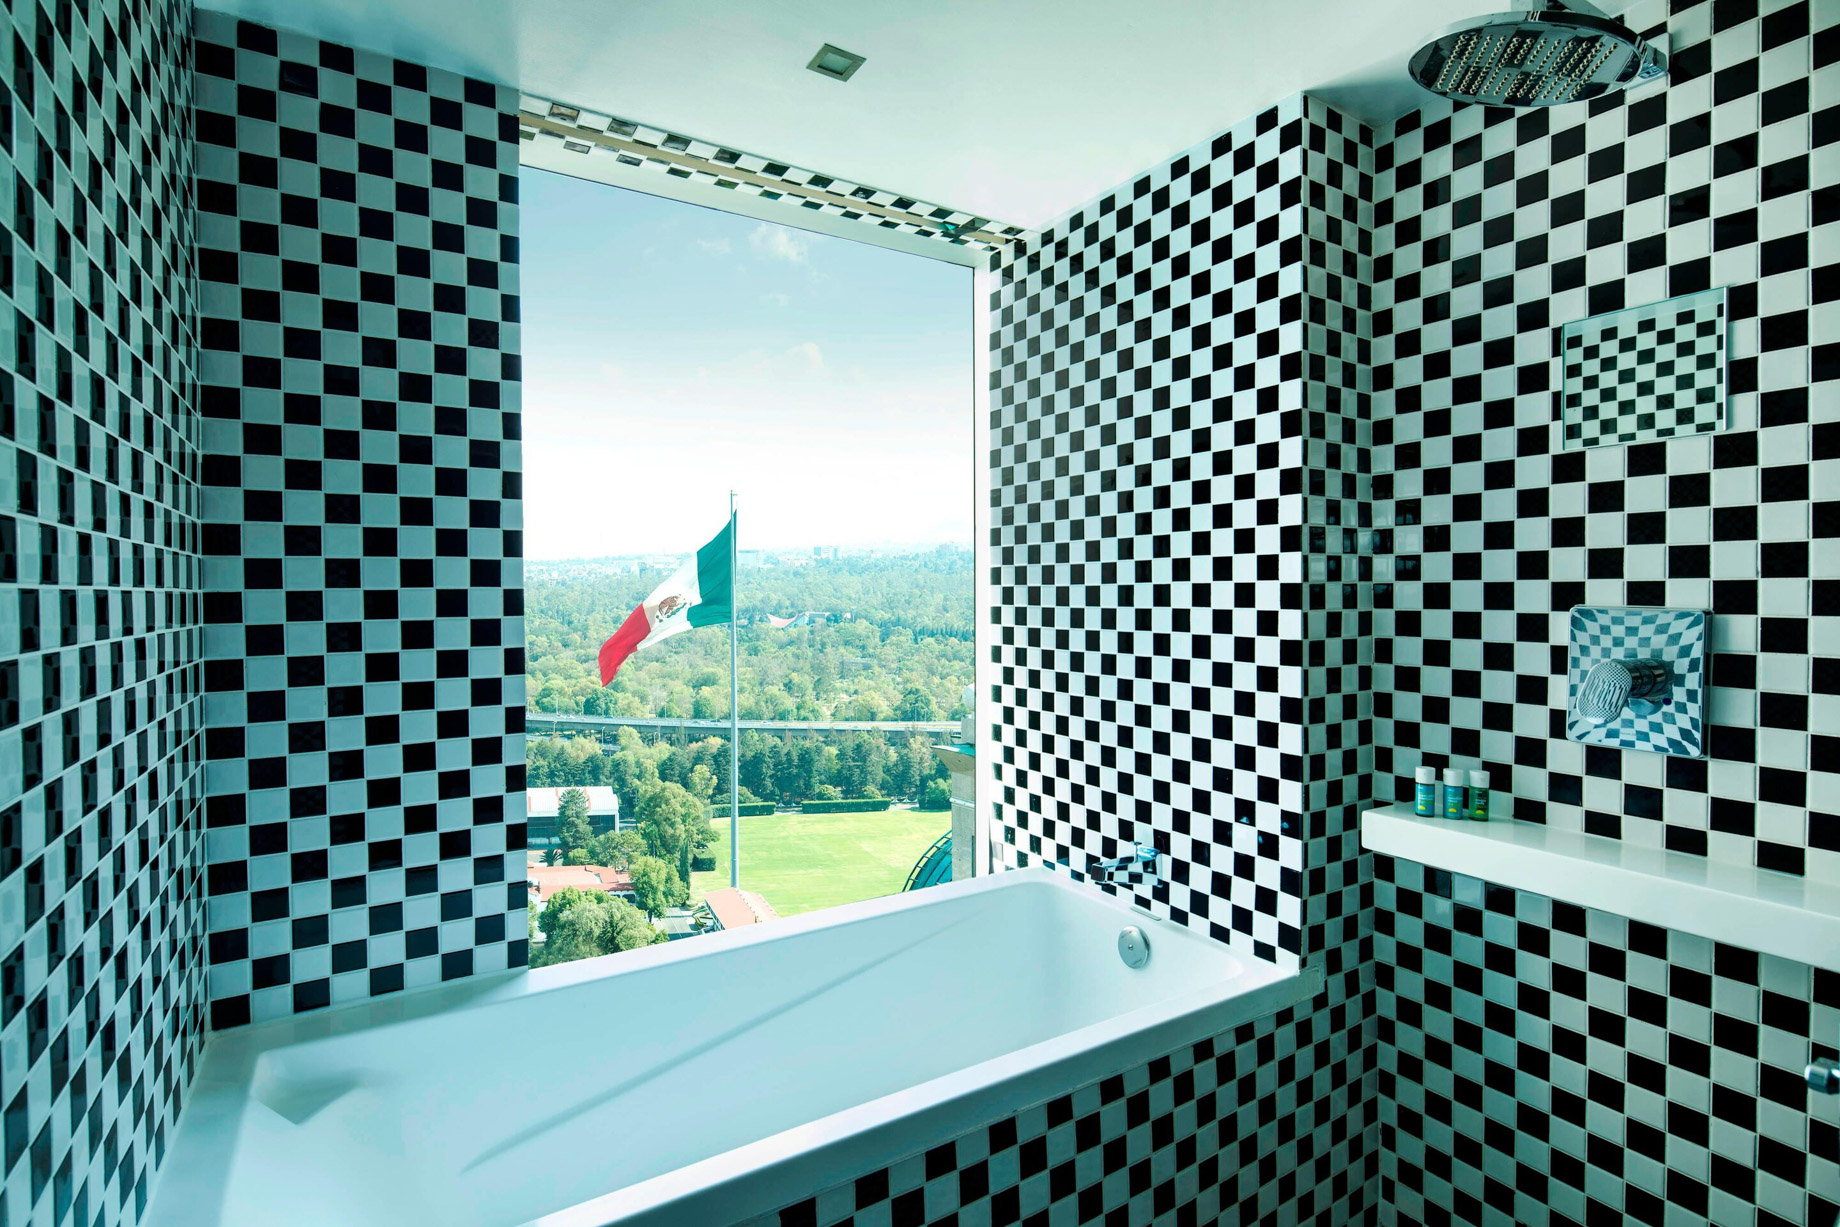 W Mexico City Hotel – Polanco, Mexico City, Mexico – Suite Bathroom Tub